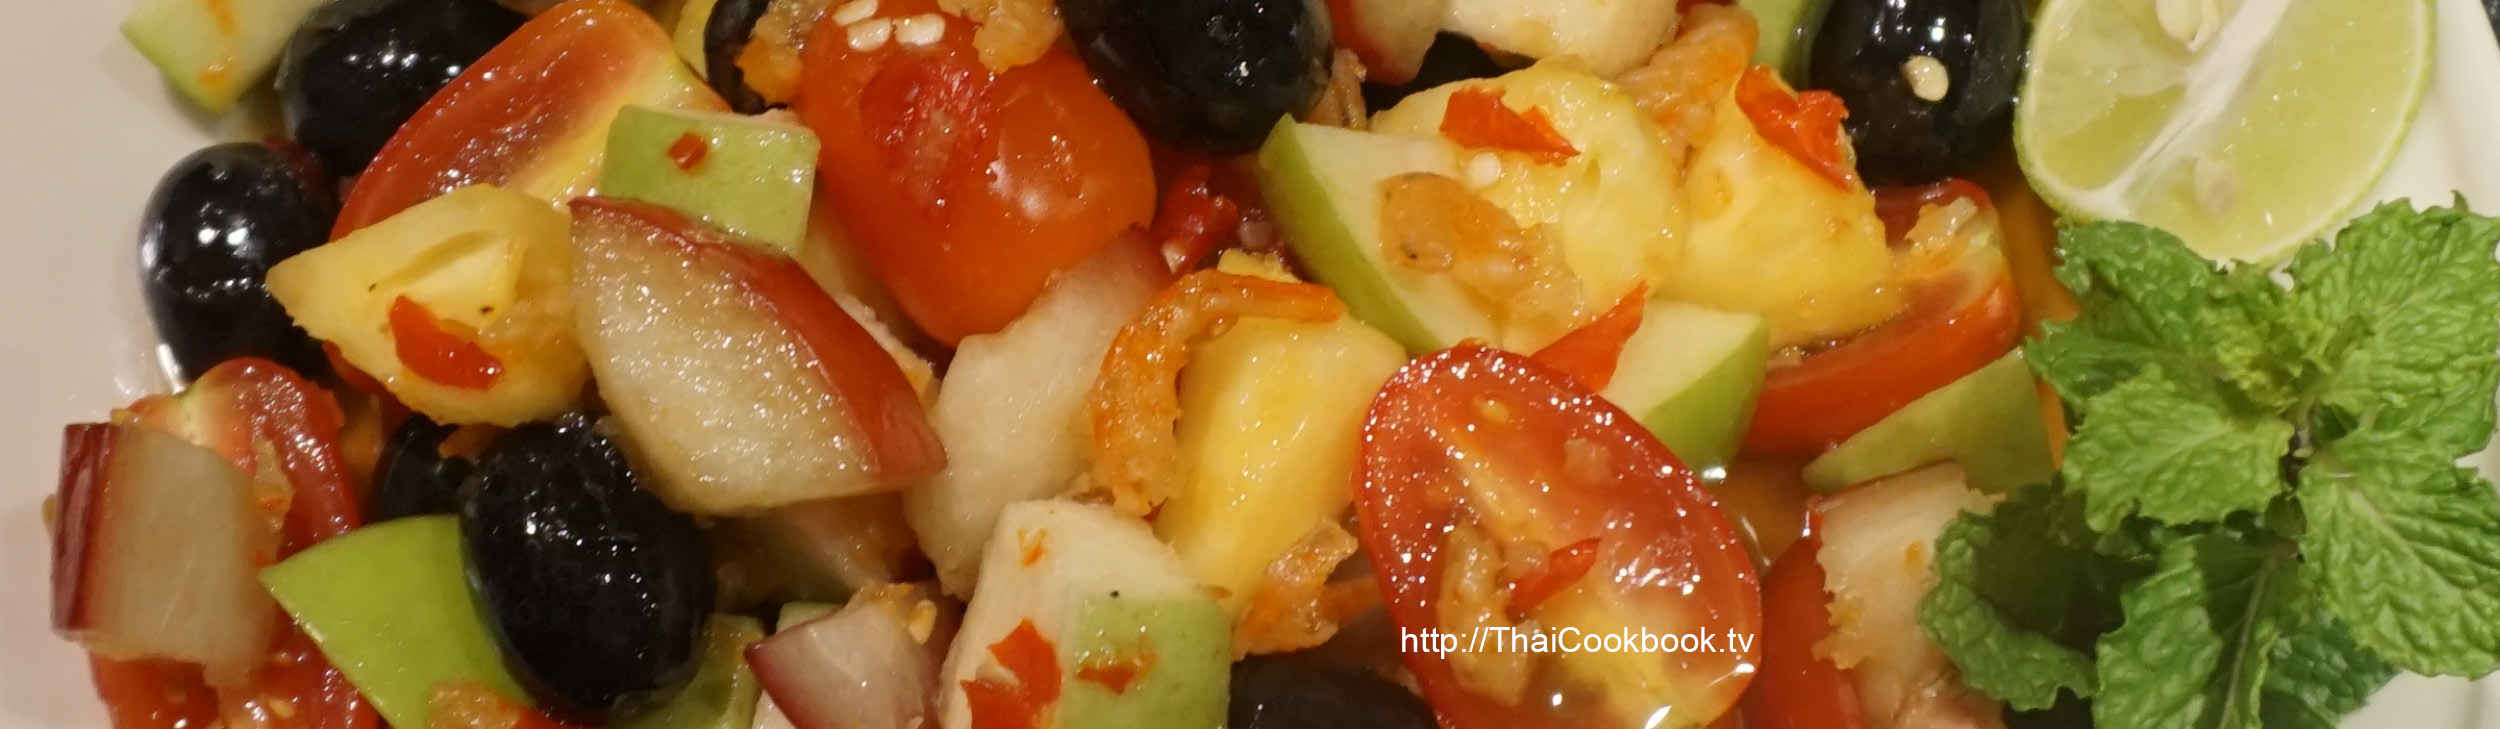 Authentic Thai recipe for Spicy Mixed Fruit Salad